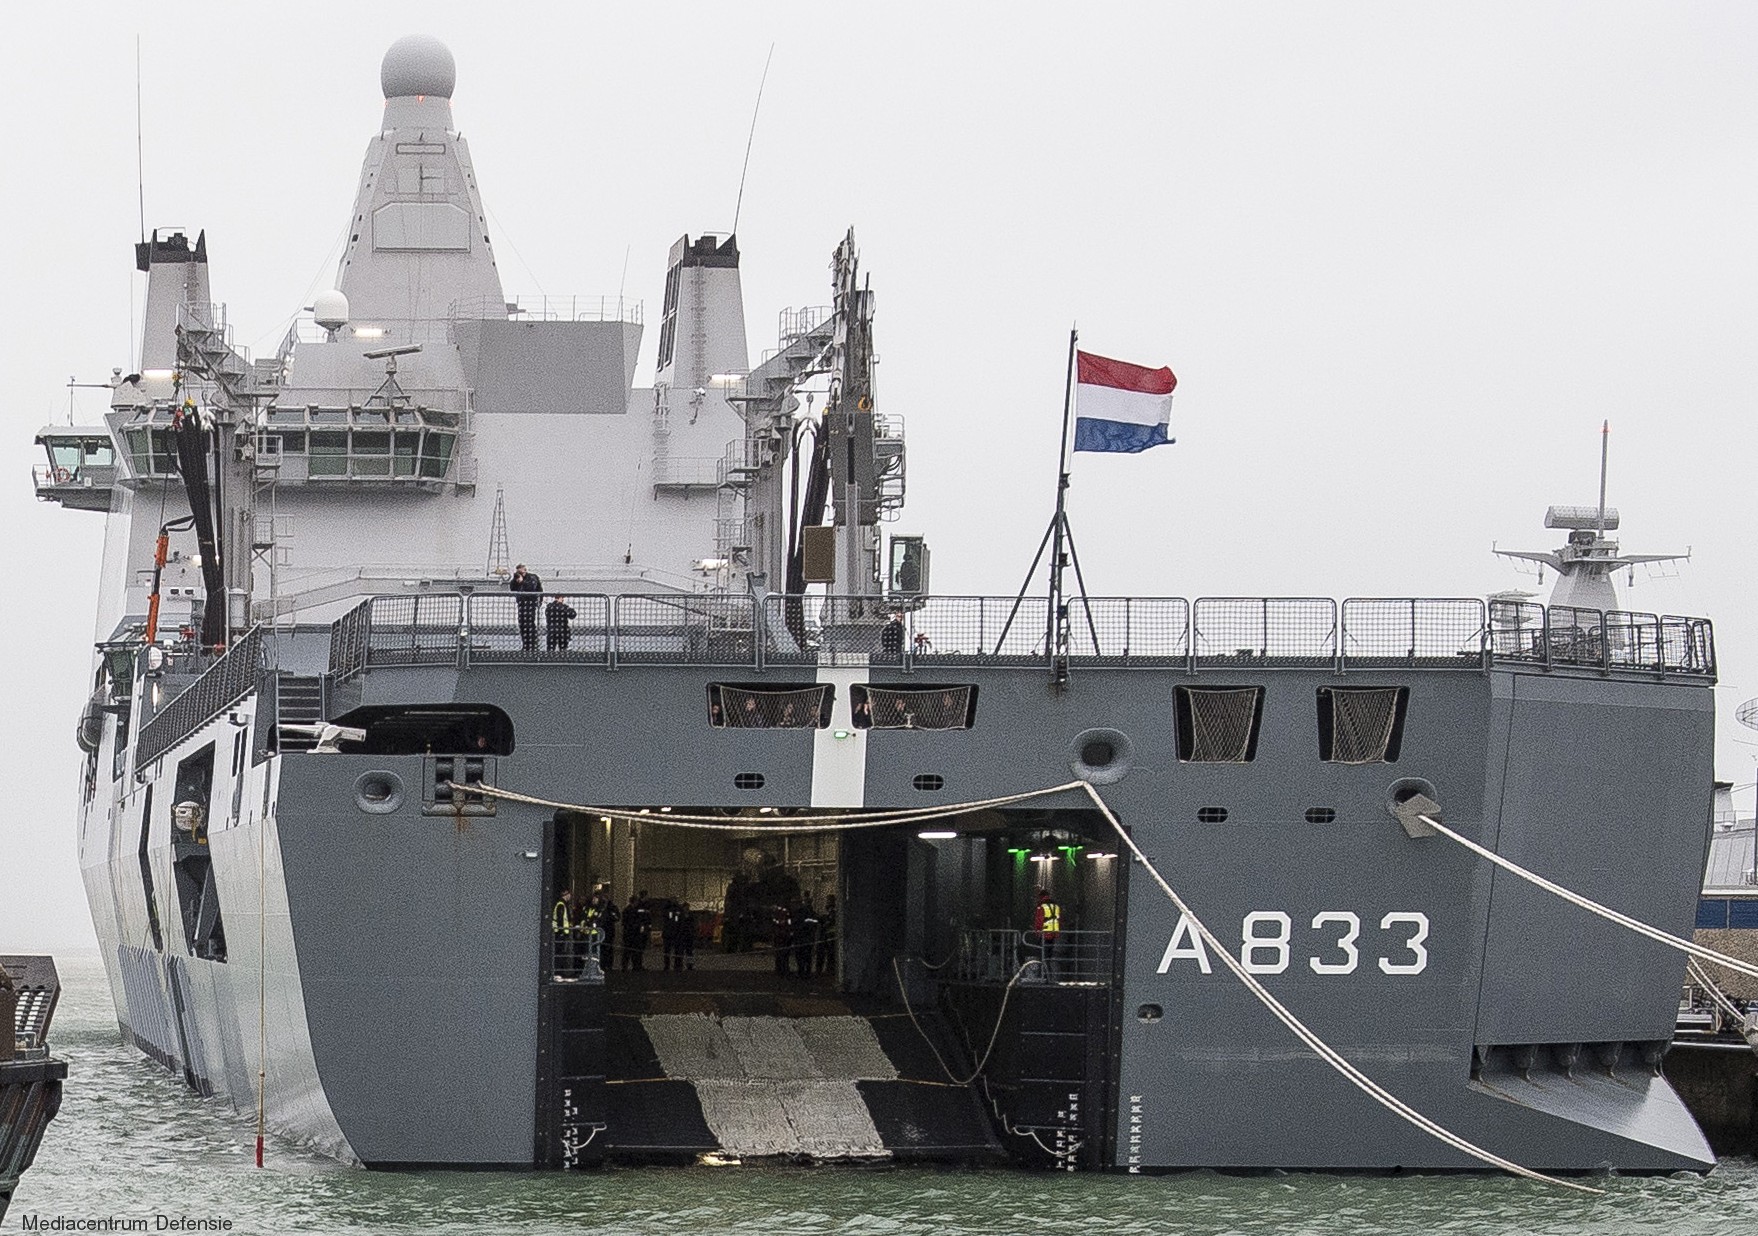 a-833 hnlms karel doorman joint support ship royal netherlands navy koninklijke marine 18 well deck landing craft vehicle personnel lcvp